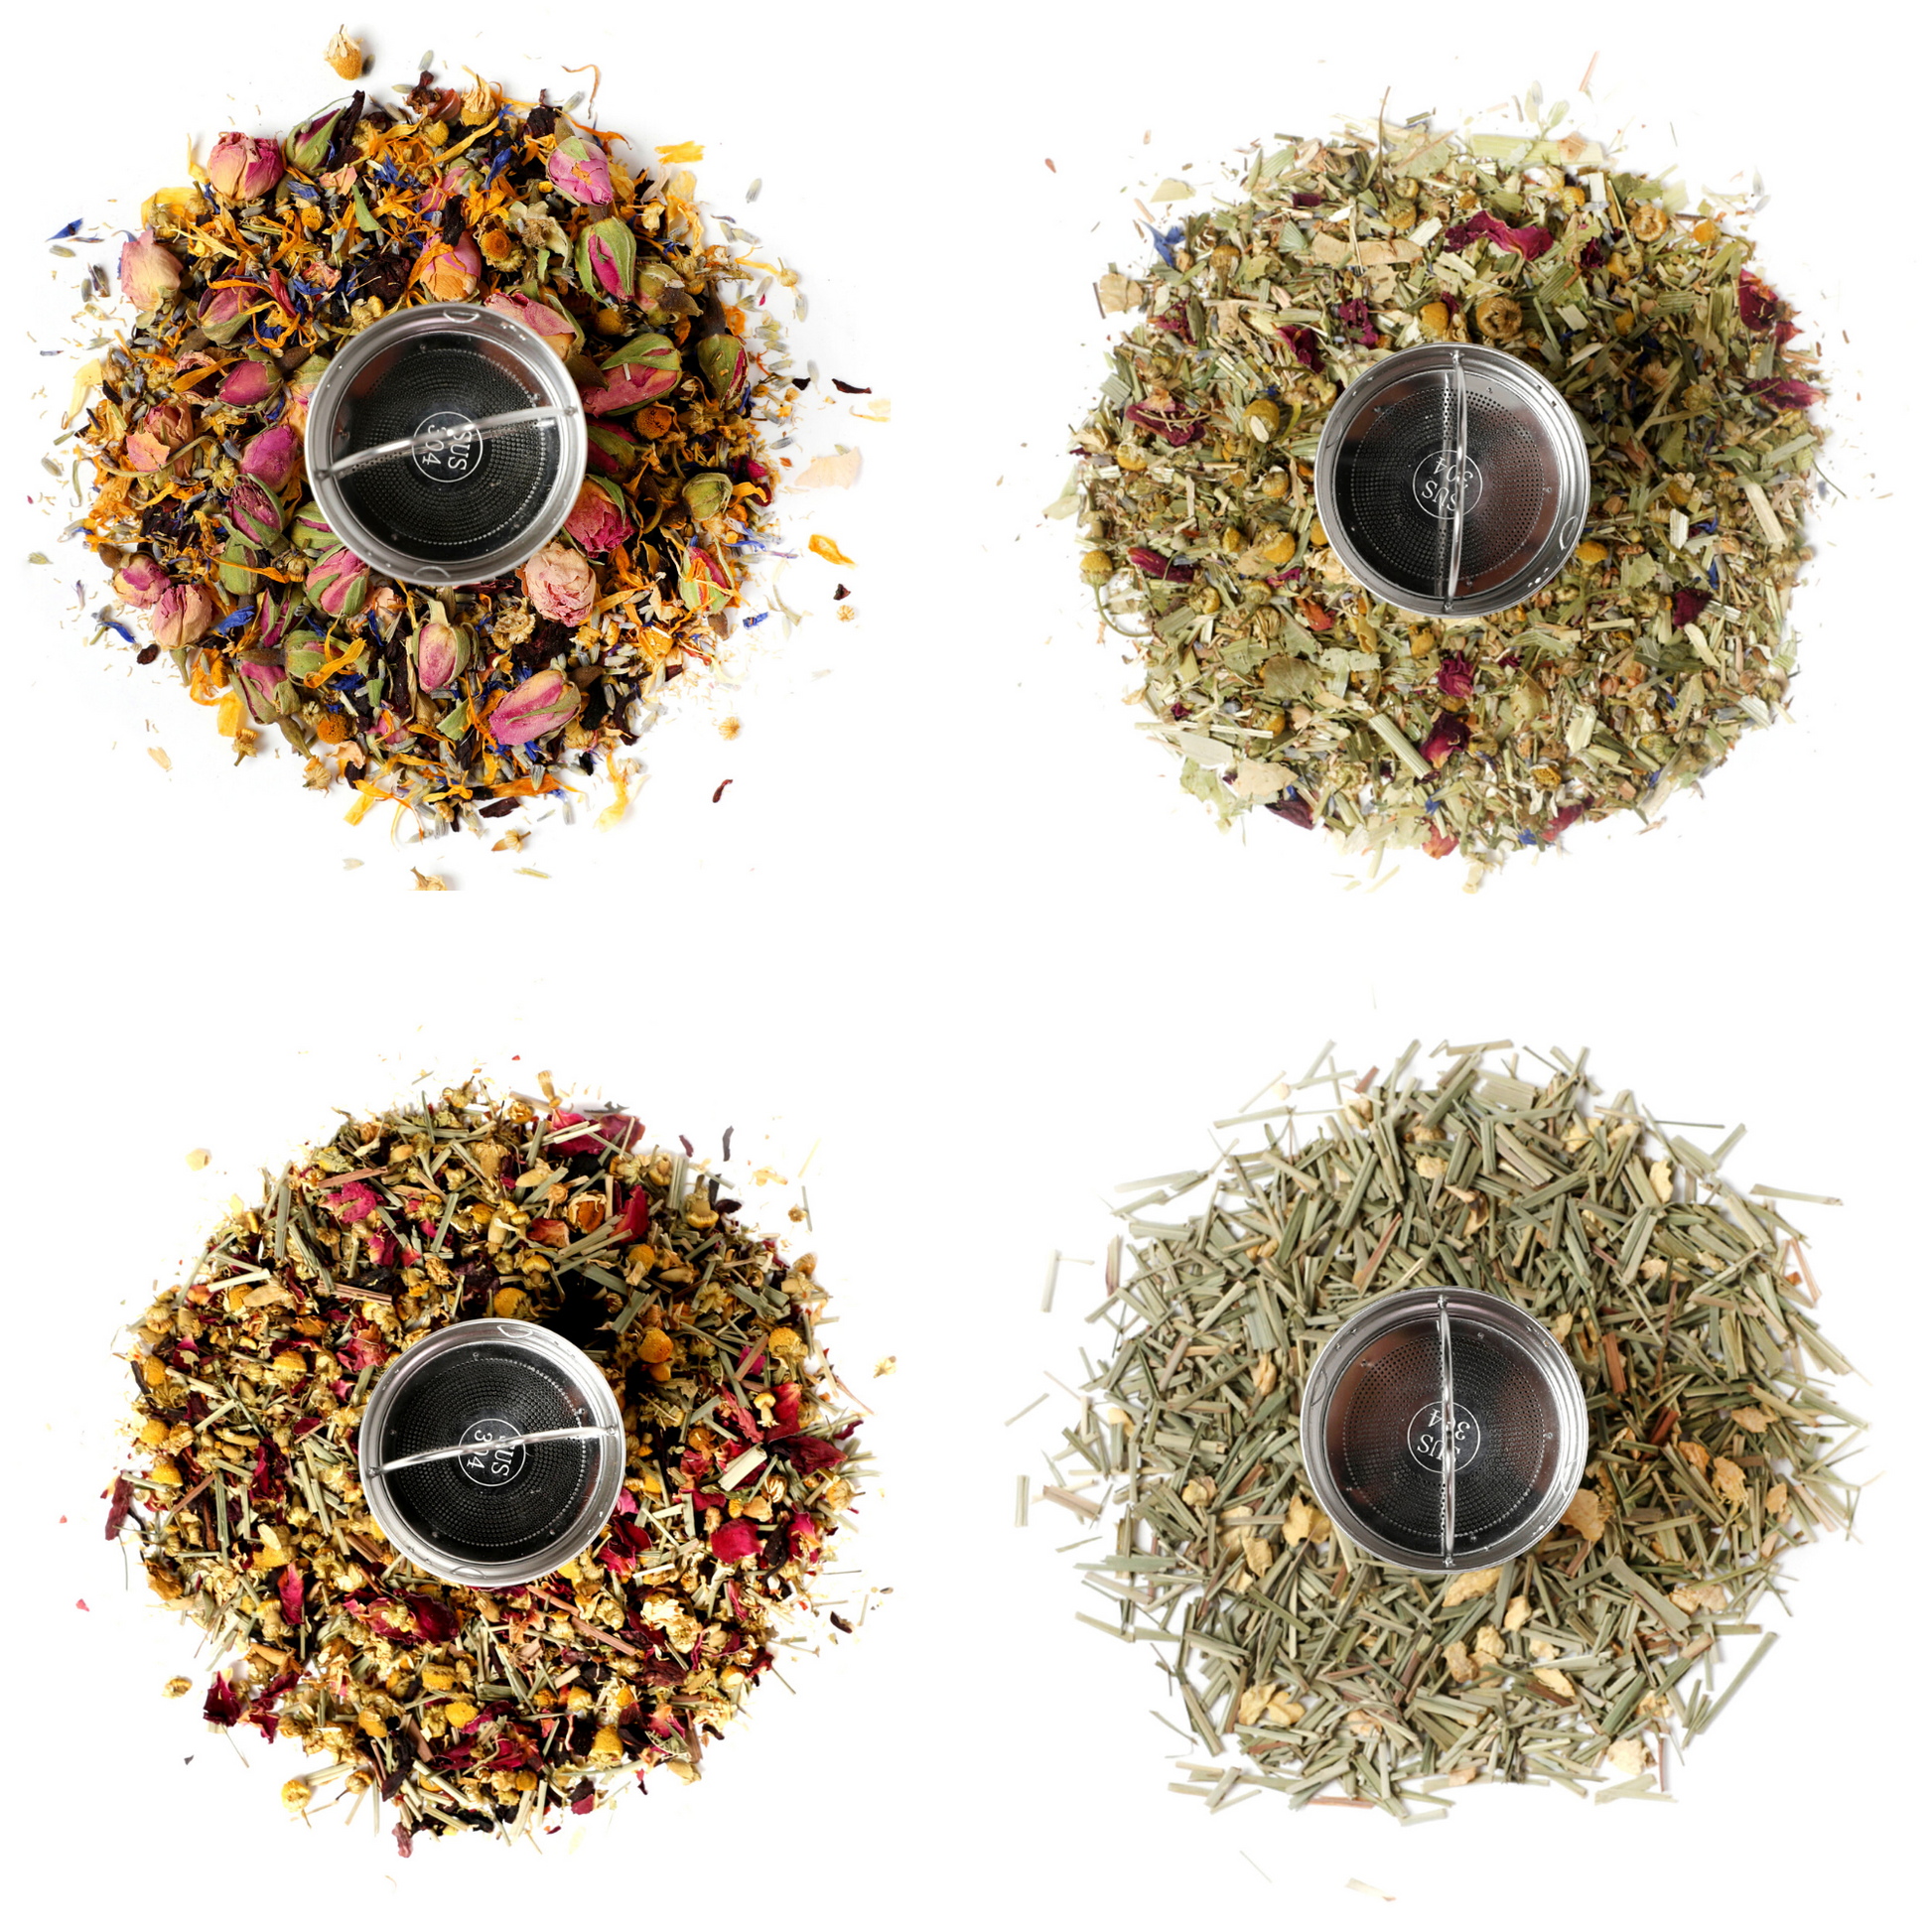 Kodu Herbal Passion Tea Sampler Gift Box - Loose Leaf Tea Infusion - Tea Gift Box - Size: 4 Pack